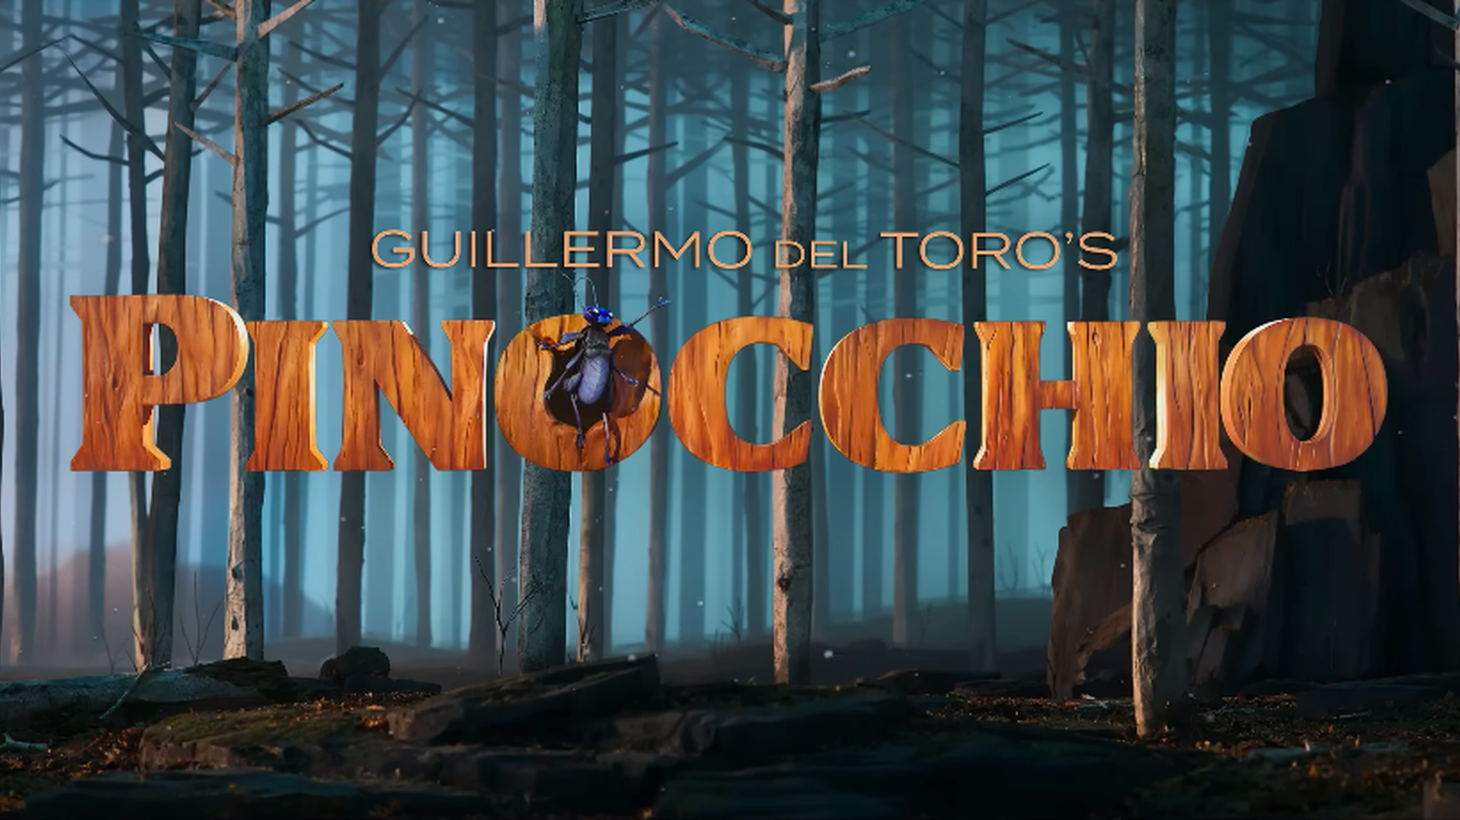 Guillermo del Toro’s “Pinocchio” is a reimagining of the Disney classic.